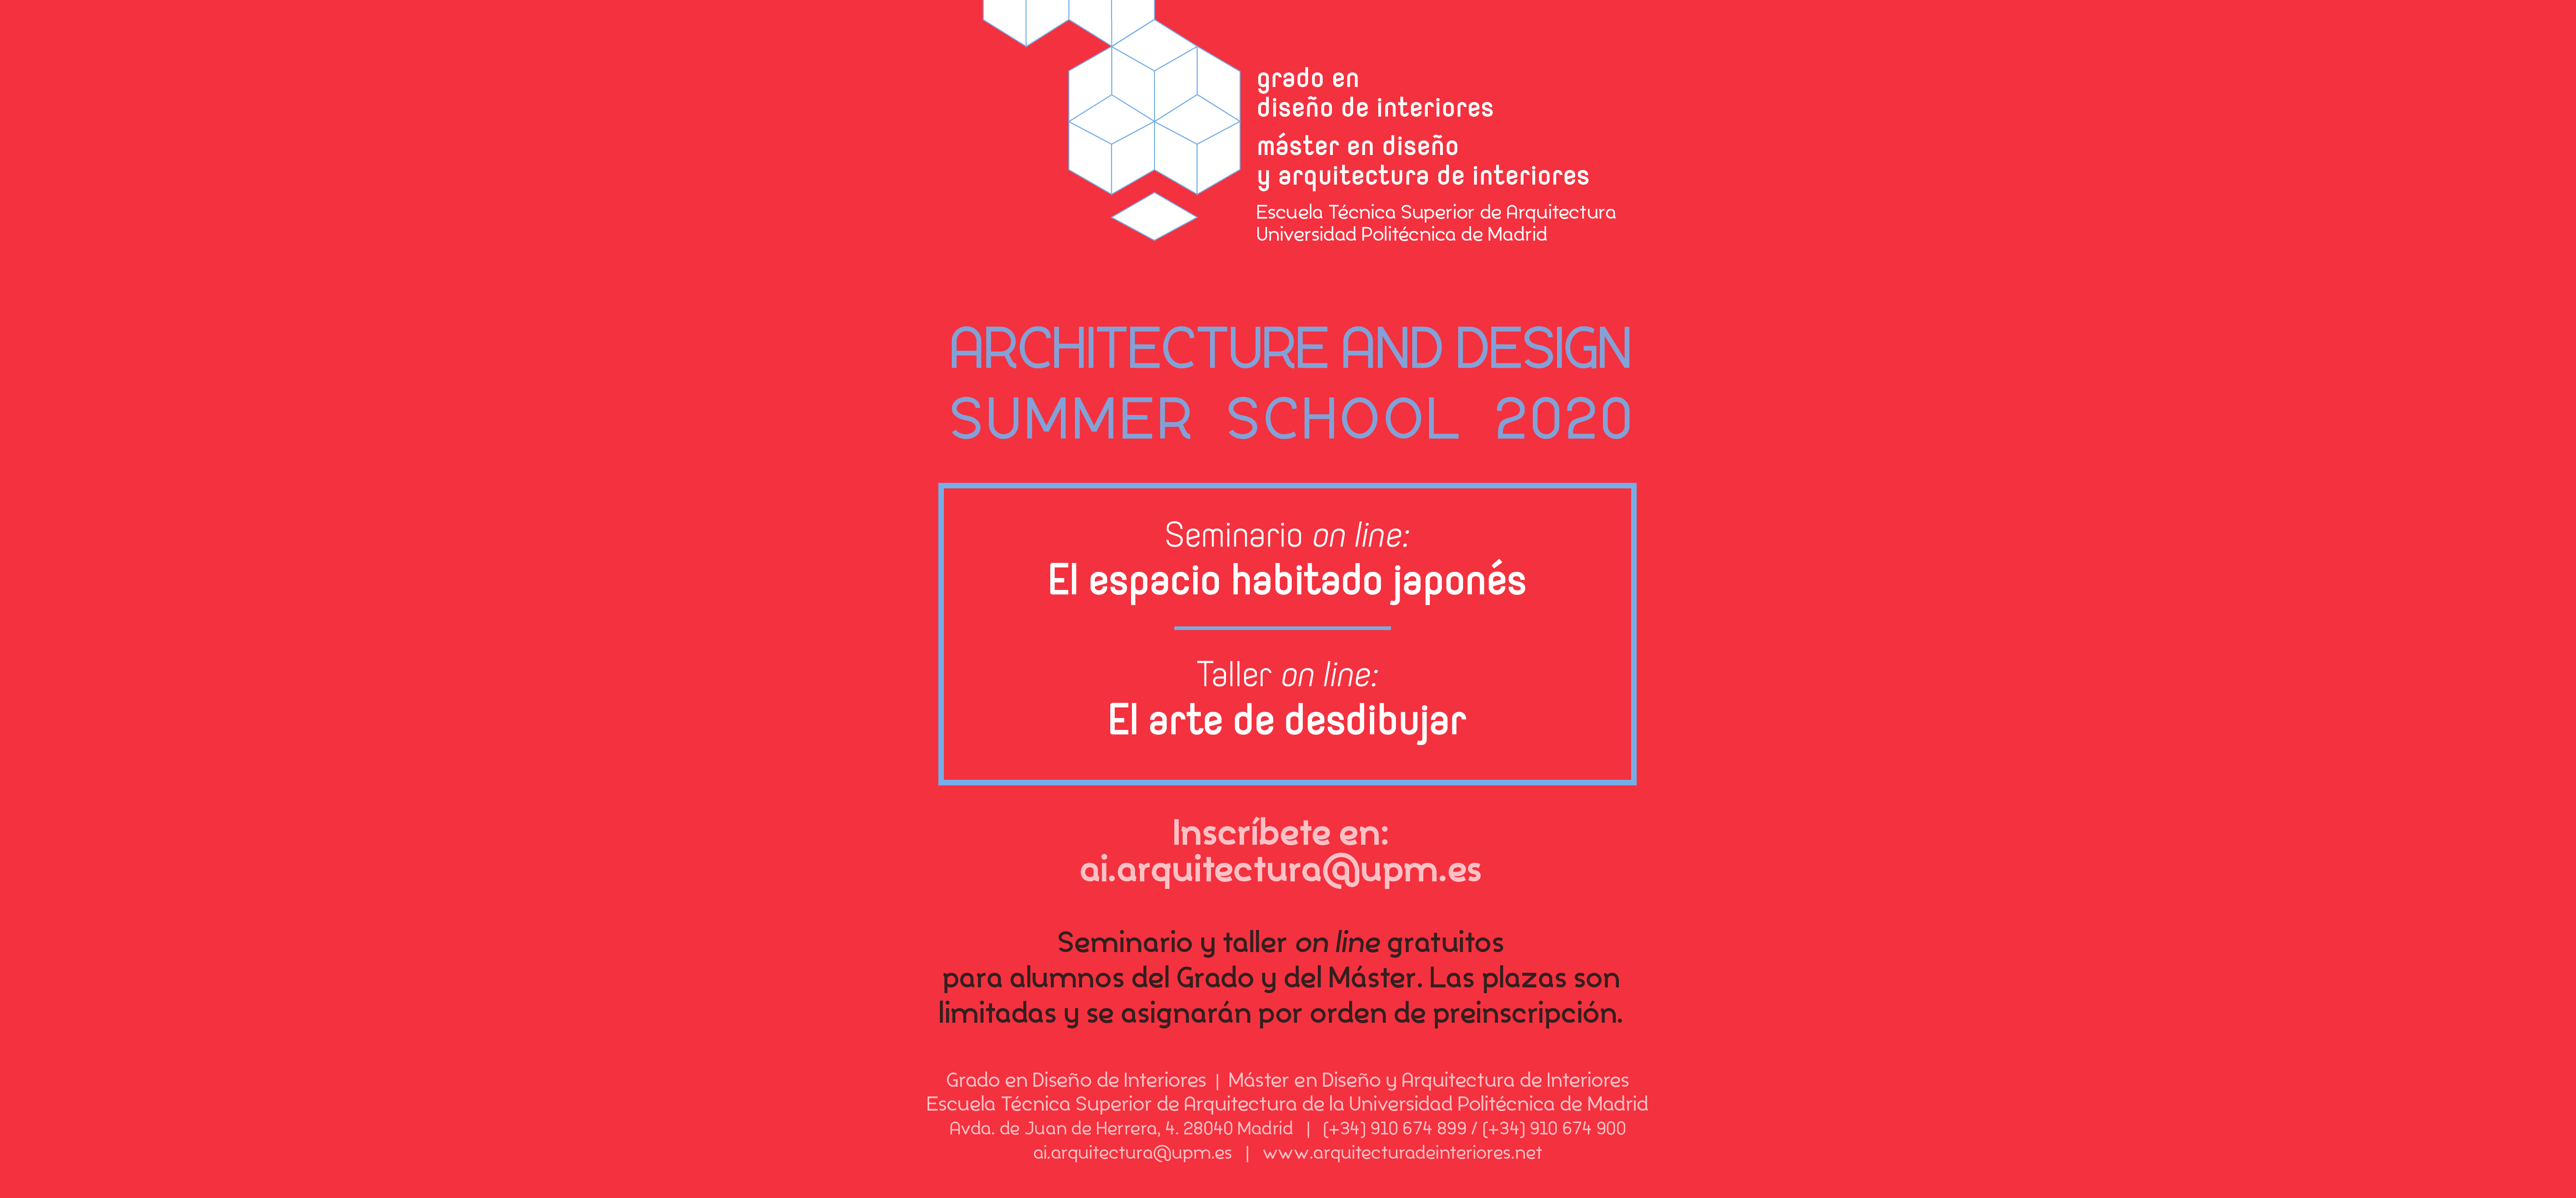 Architecture and design Summer School 2020